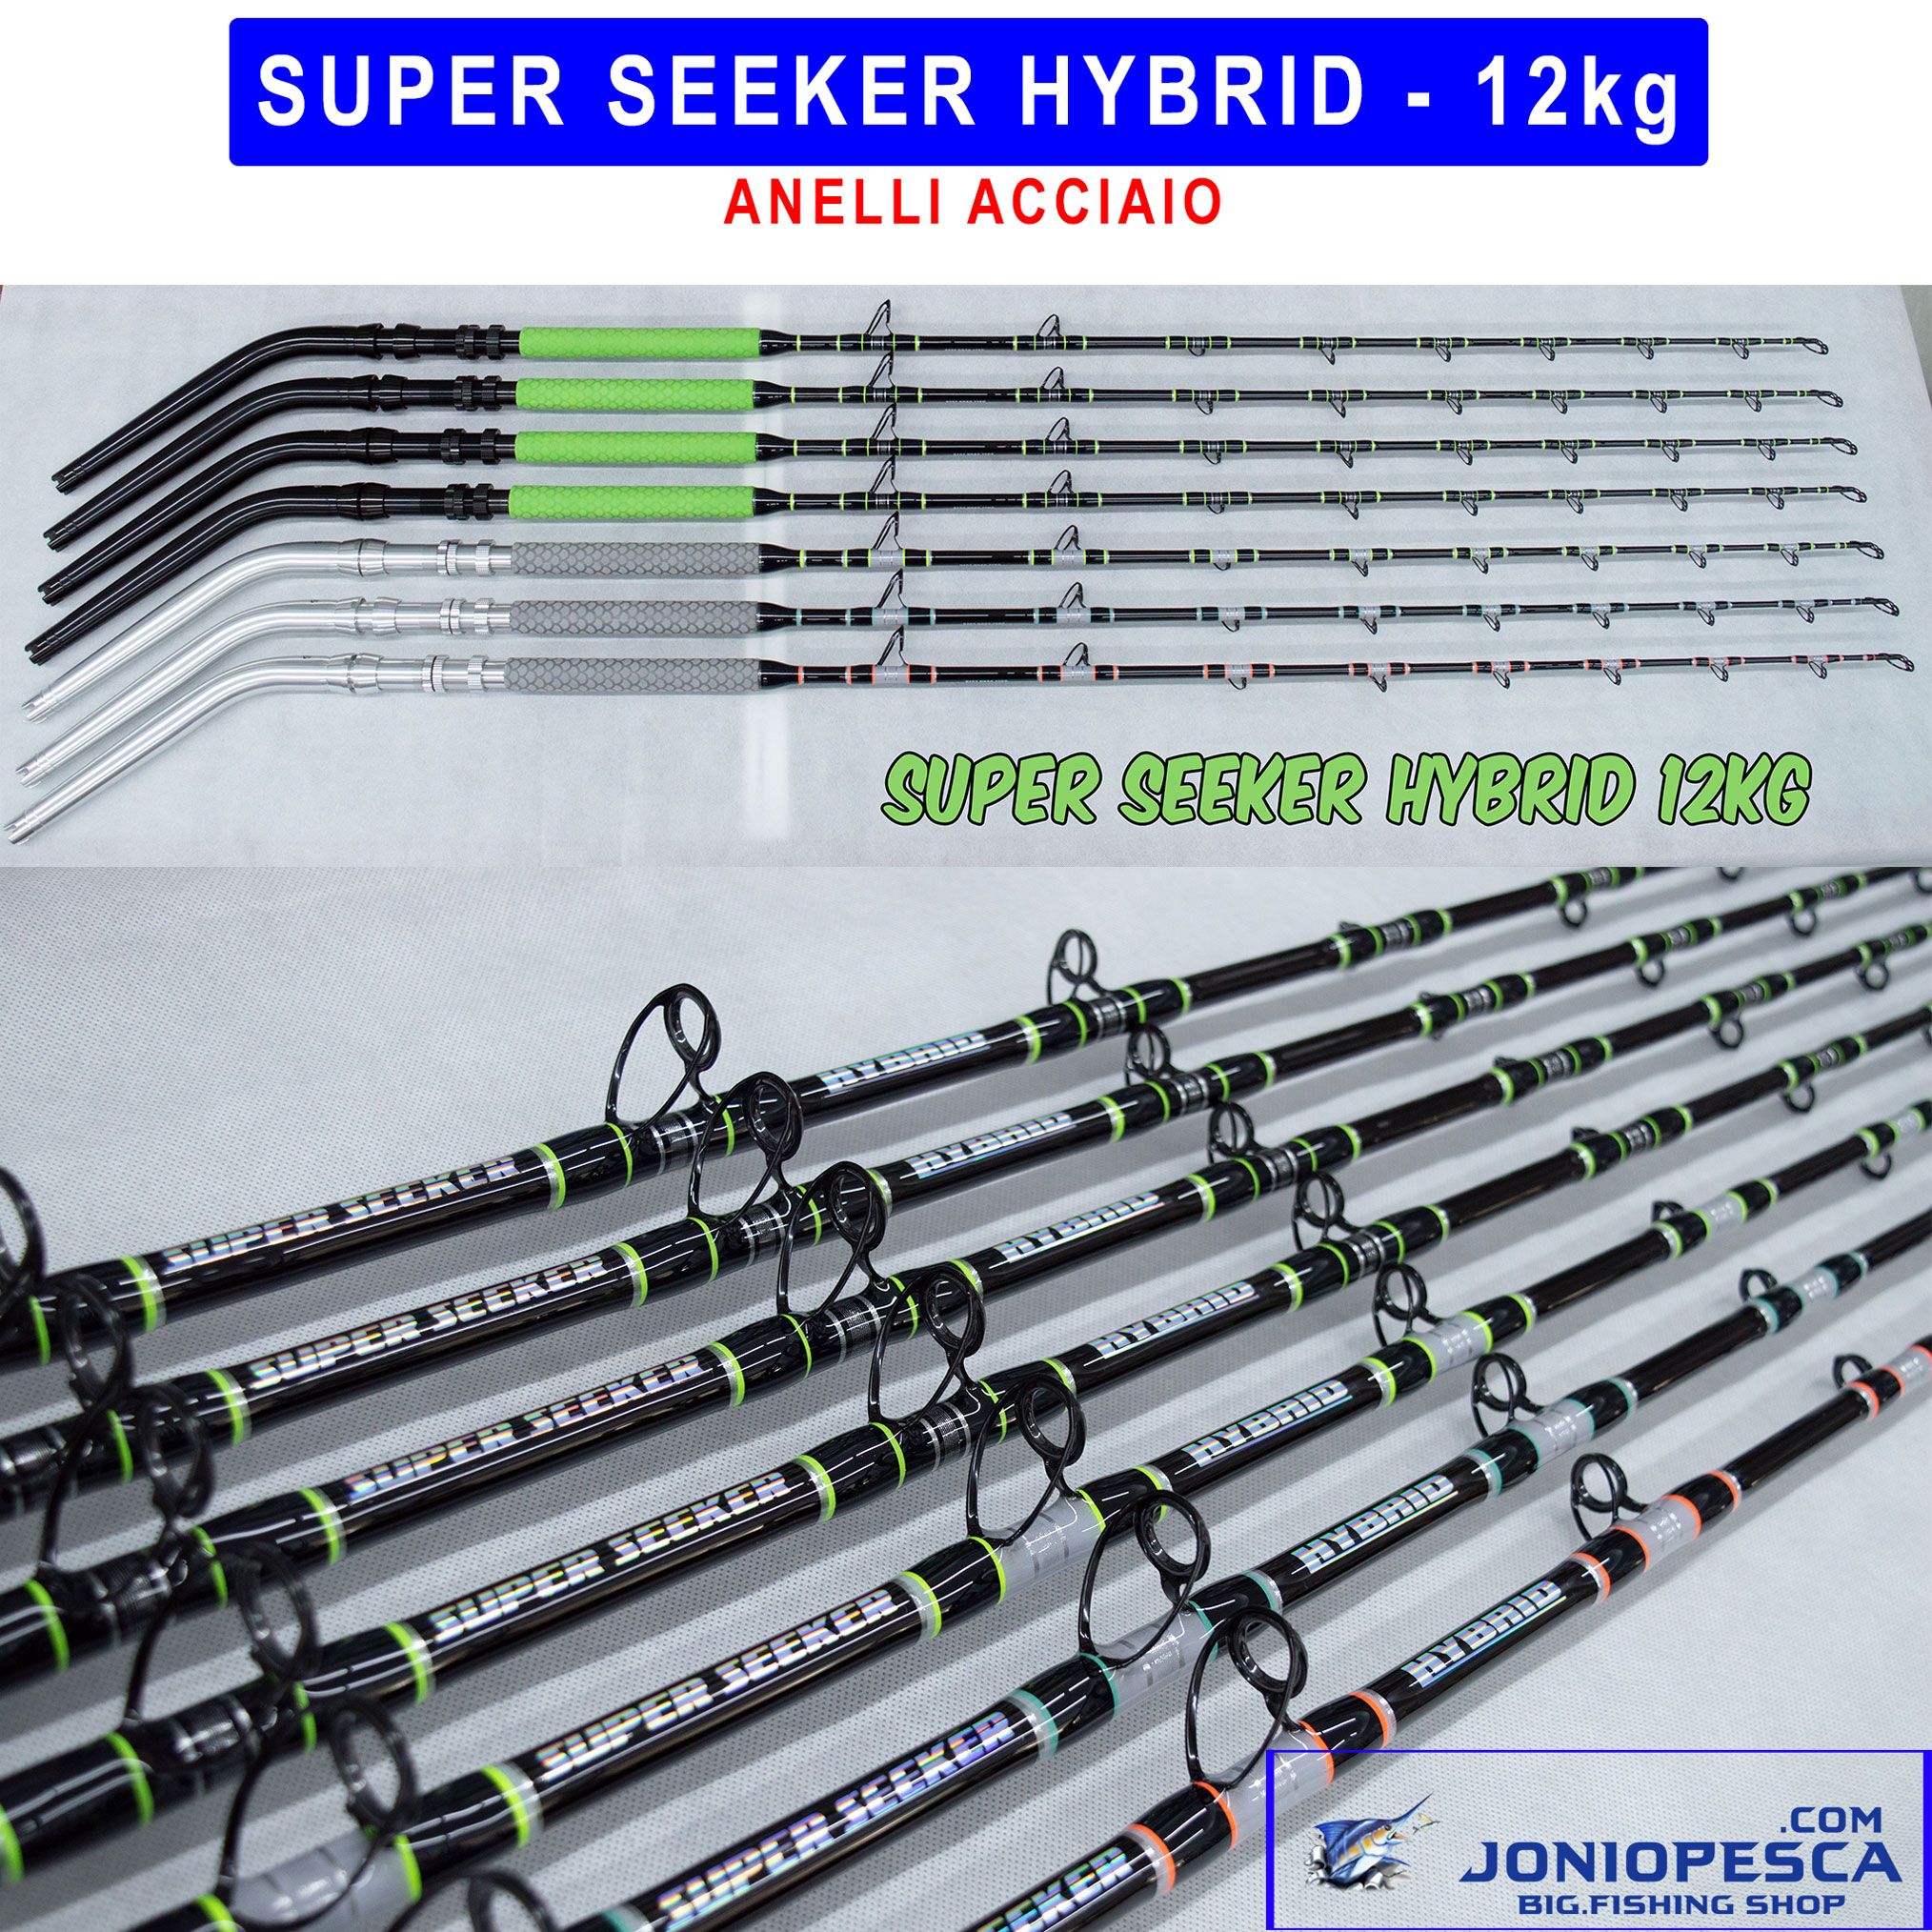 super-seeker-hybrid-12kg-anelli-acciaio